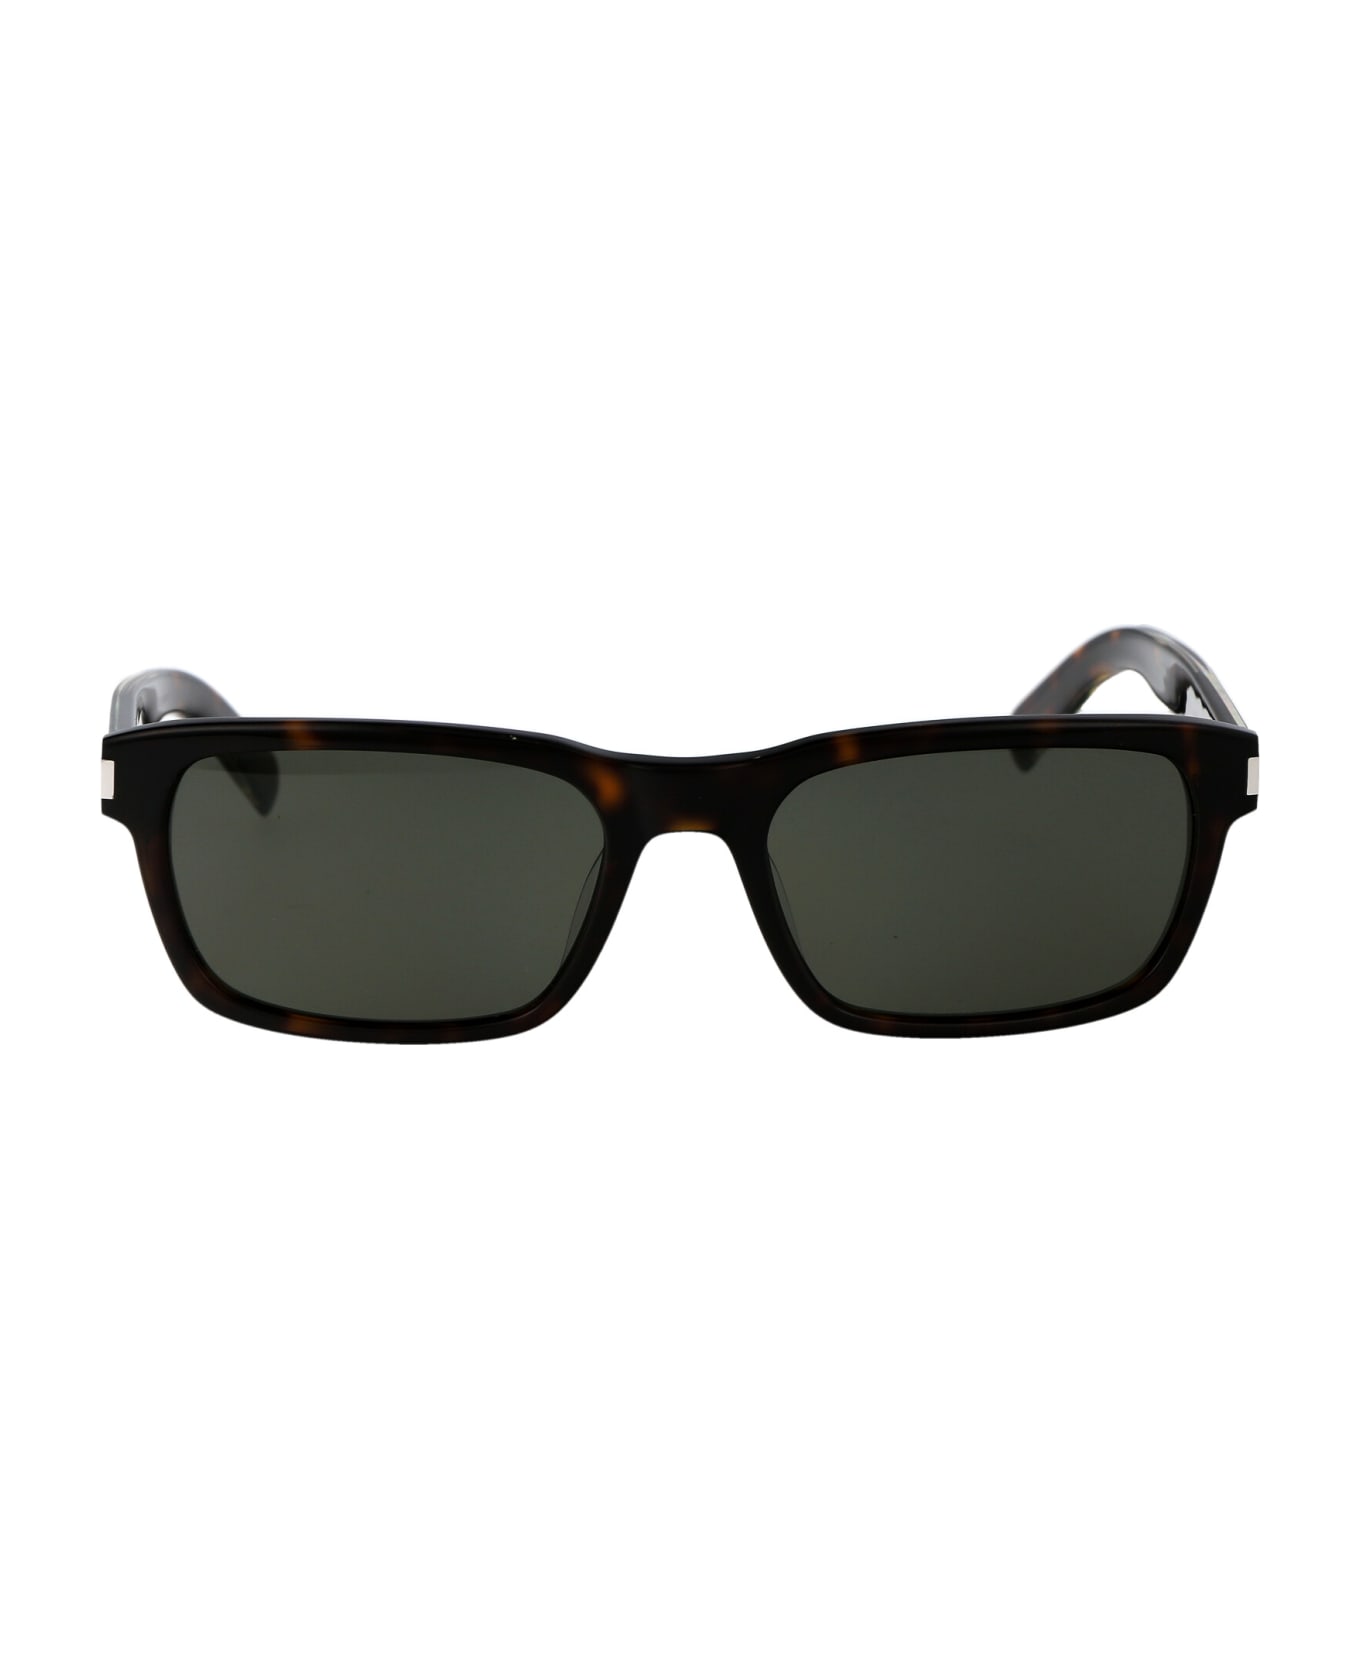 Saint Laurent Eyewear Sl 662 Sunglasses - 004 HAVANA CRYSTAL GREY